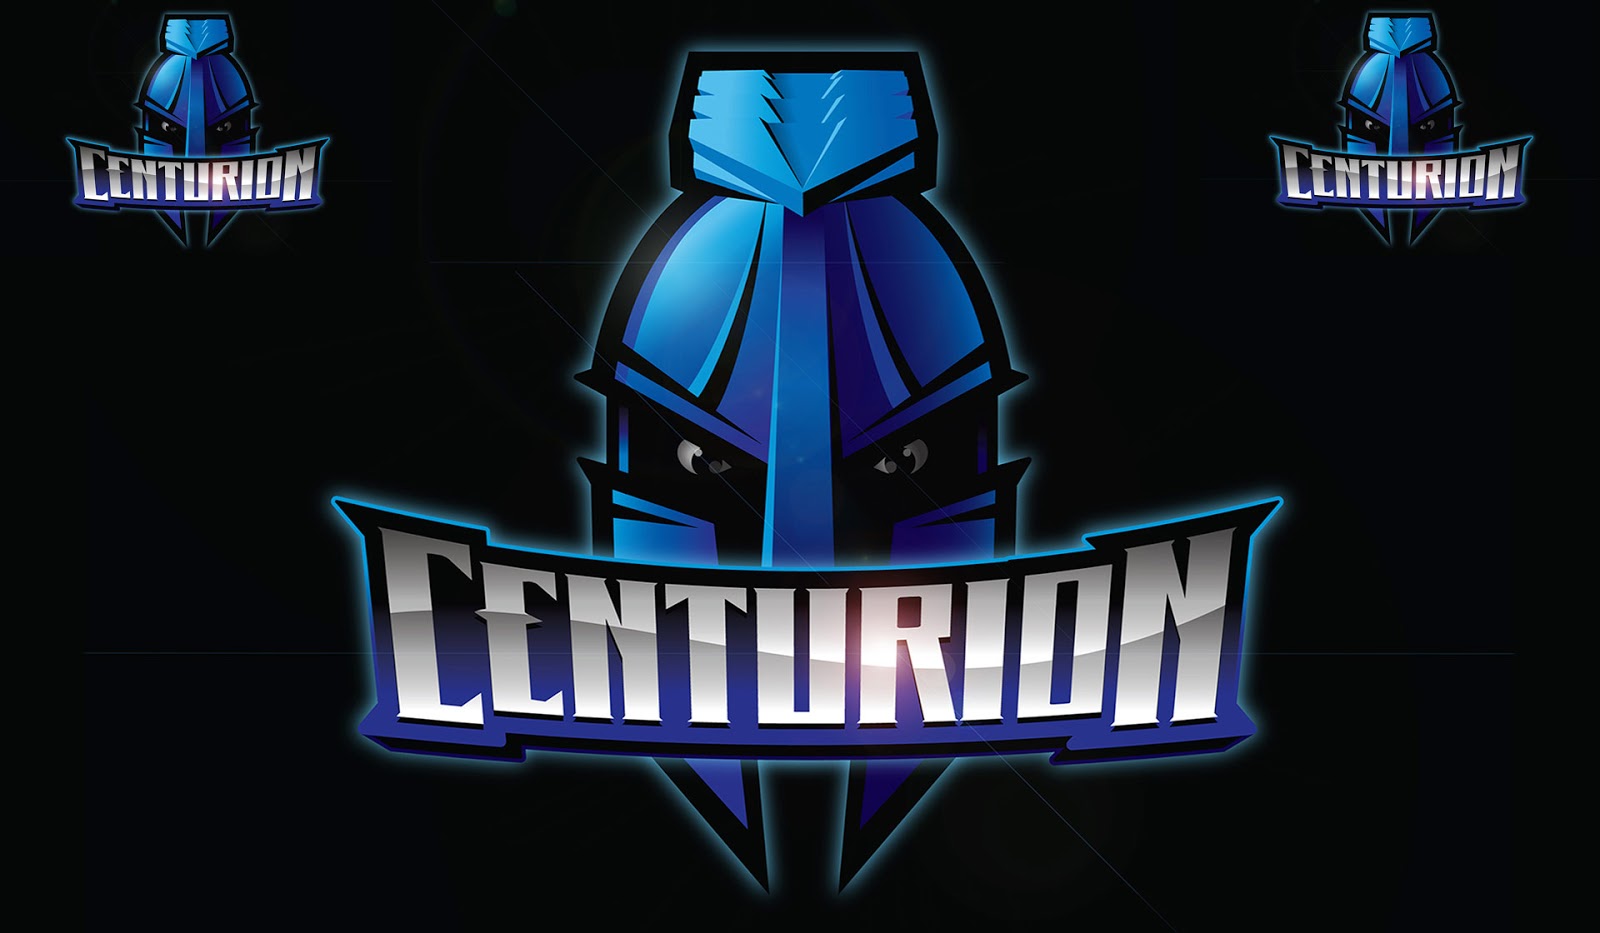 ca_centurion_bg1.jpg